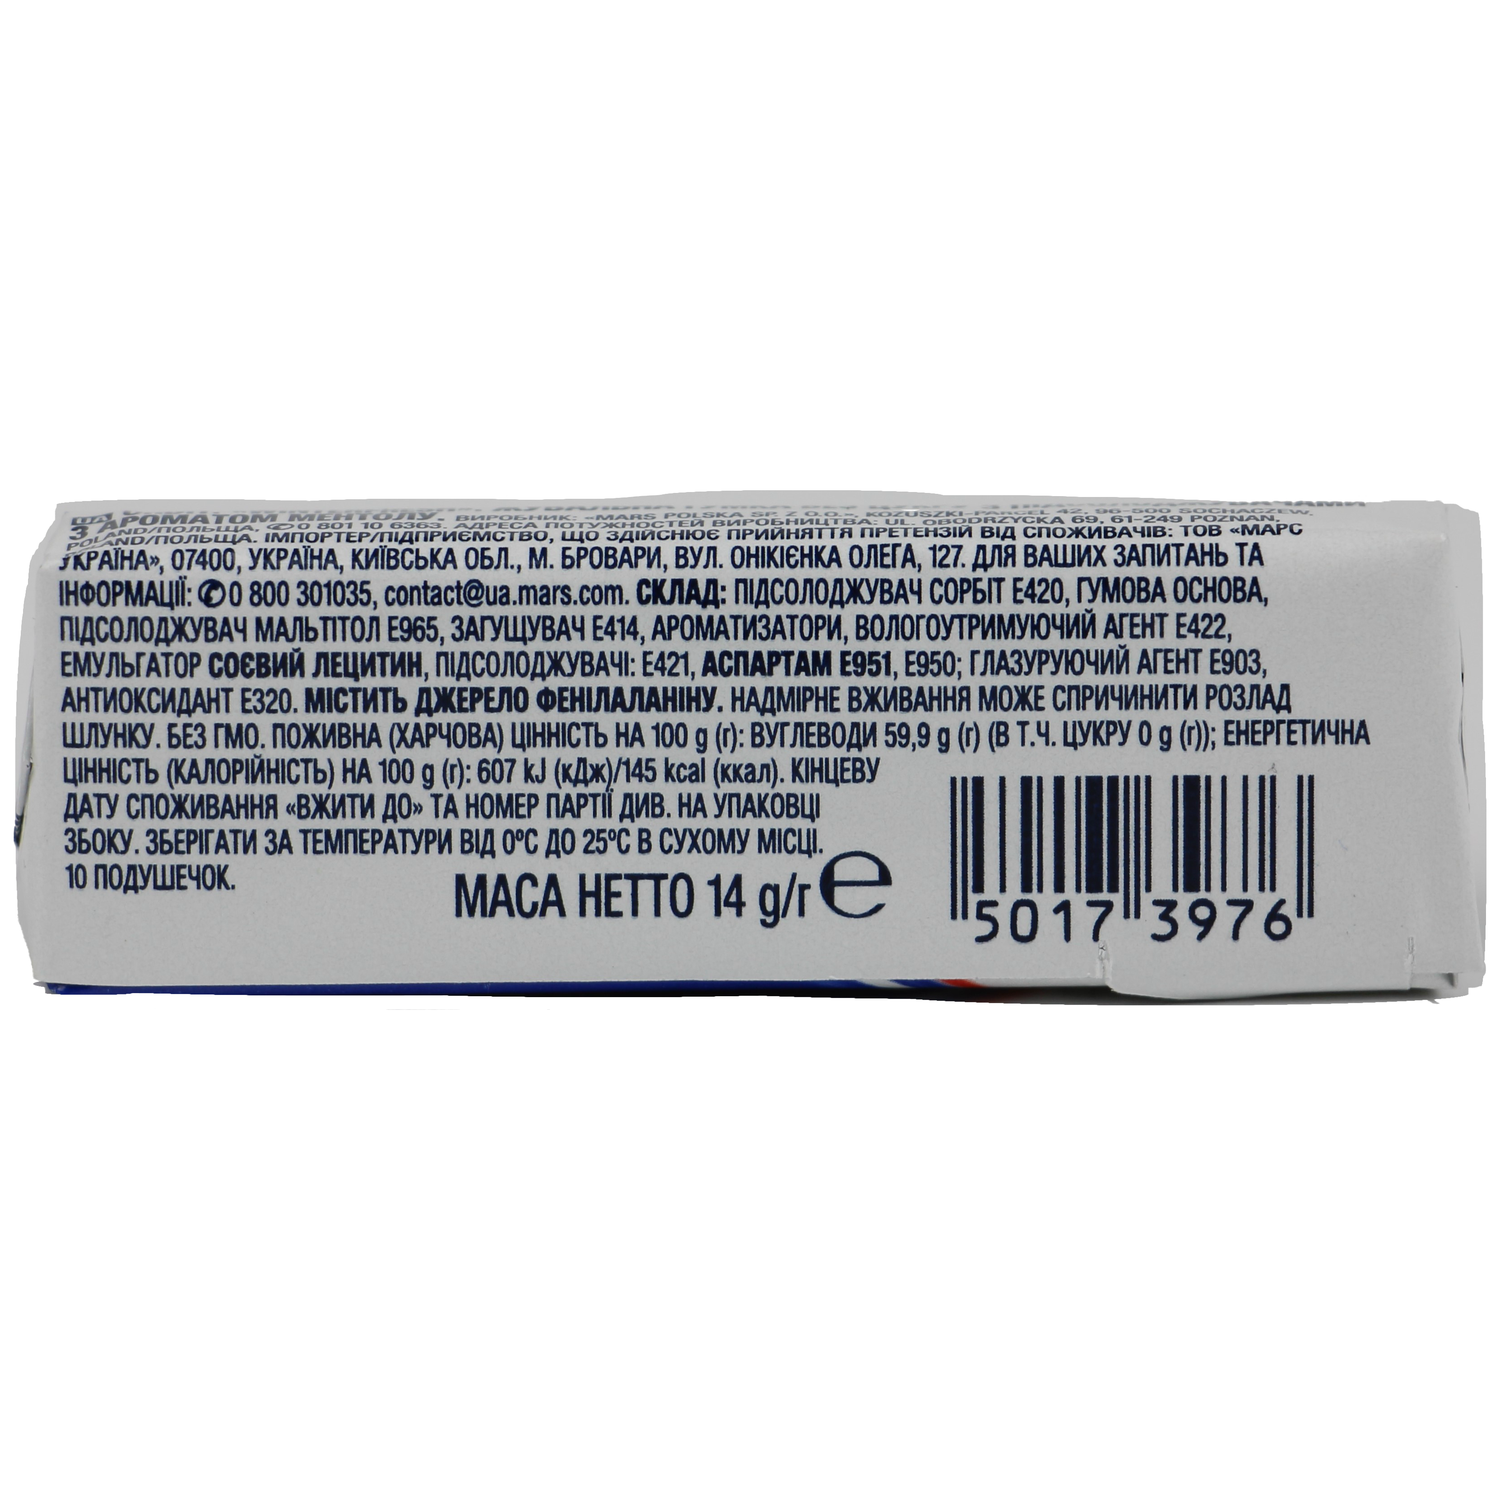 Orbit Winterfresh Sugar-Free Chewing Gum With Menthol Flavor 13.6g 2